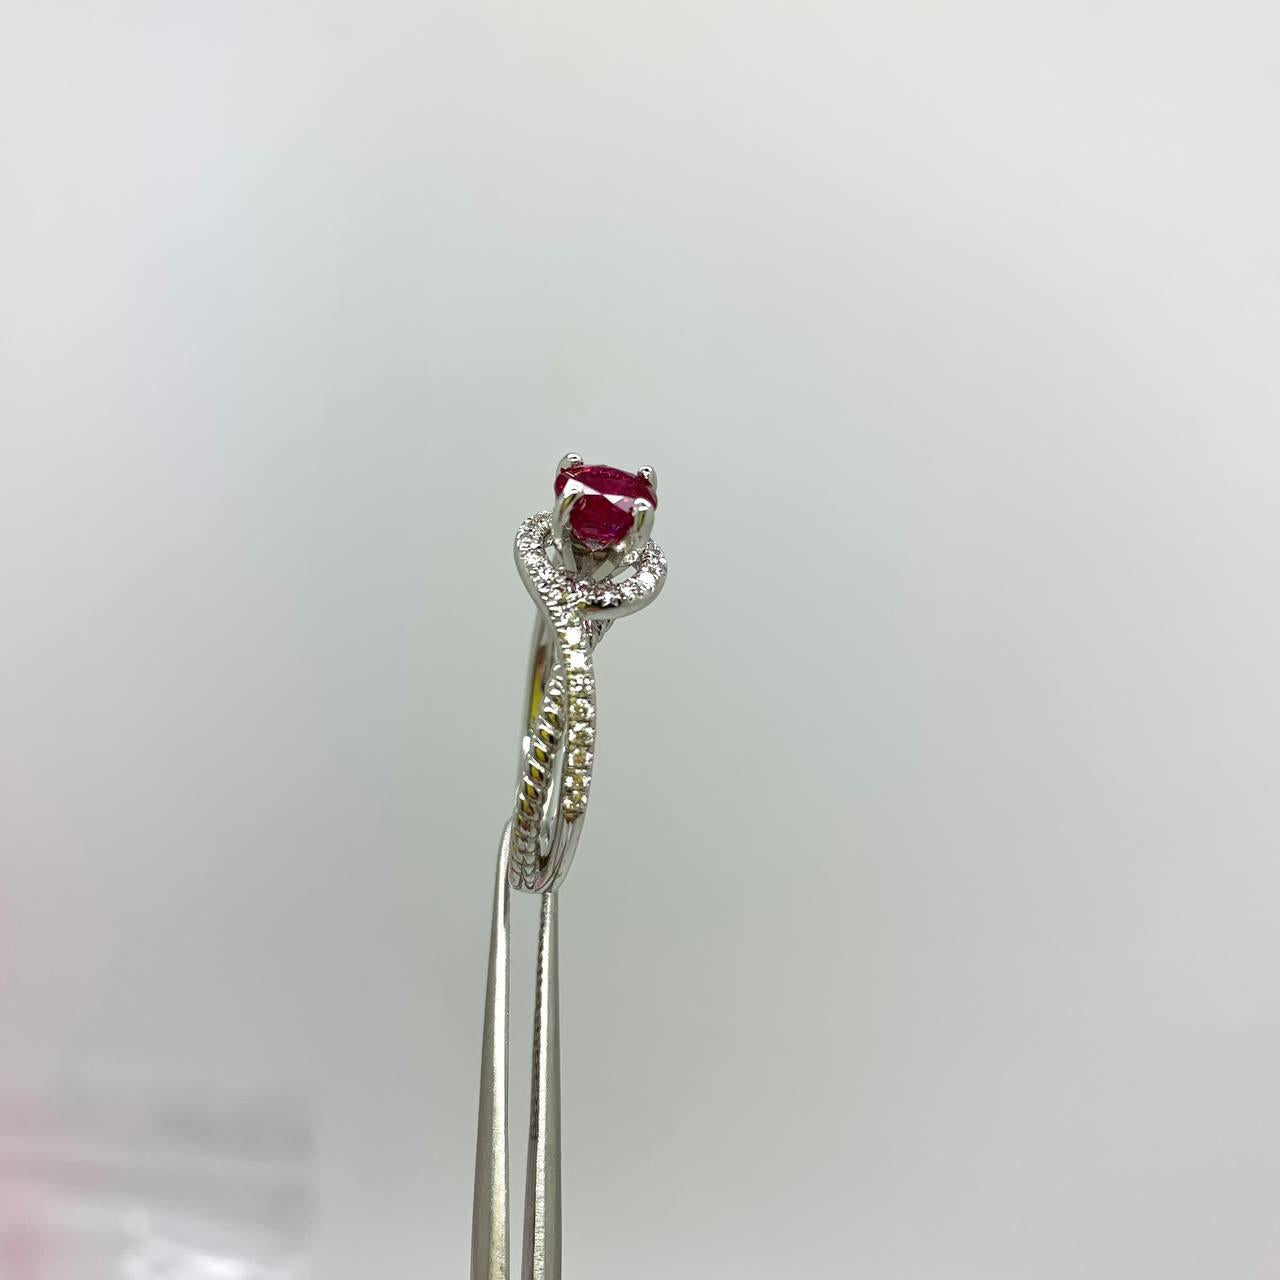 1.02 ct. Heated Ruby & White Diamonds in 14k White Gold Ring